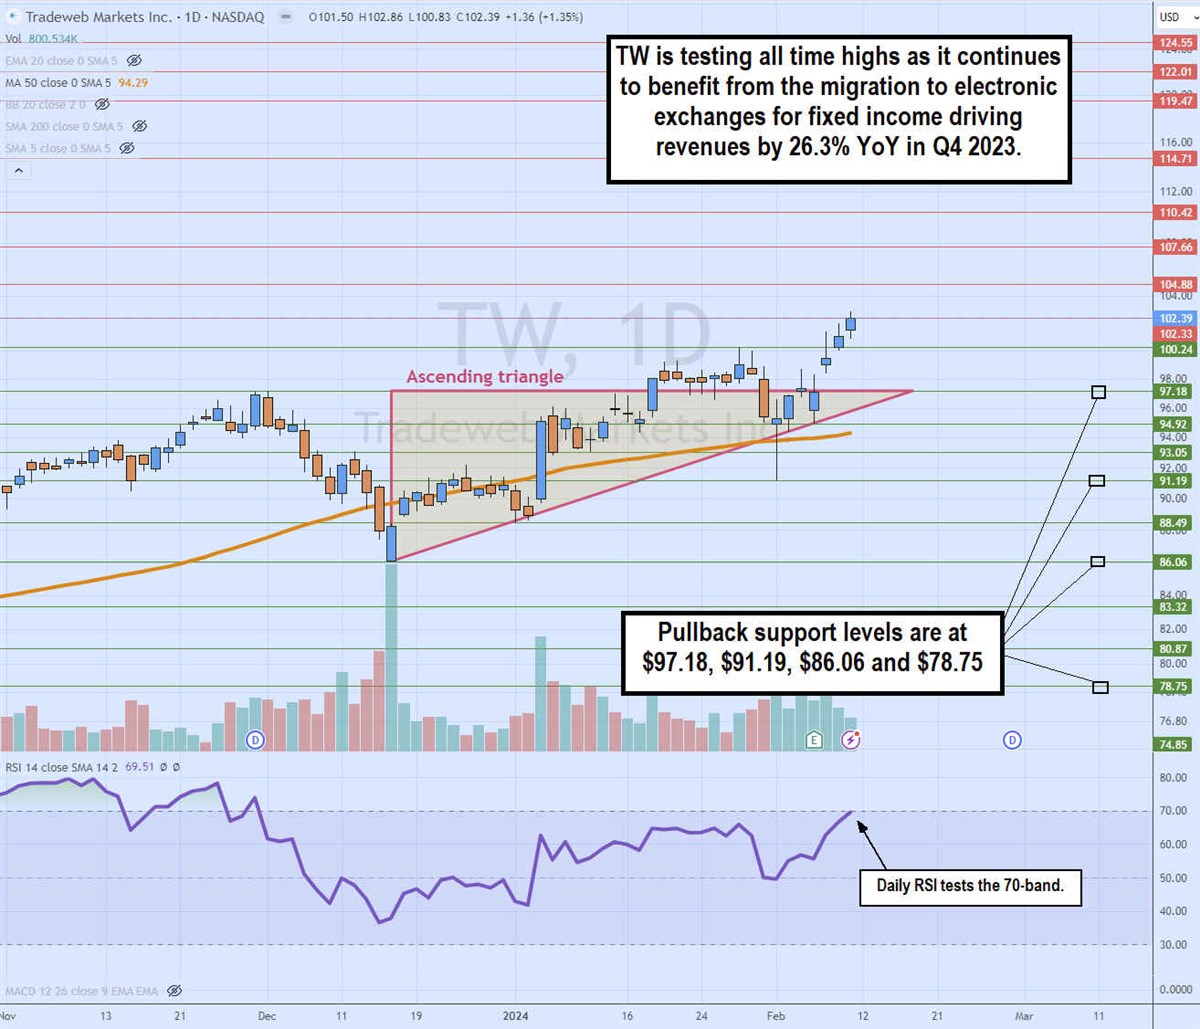 tw stock ascending triangle breakout pattern